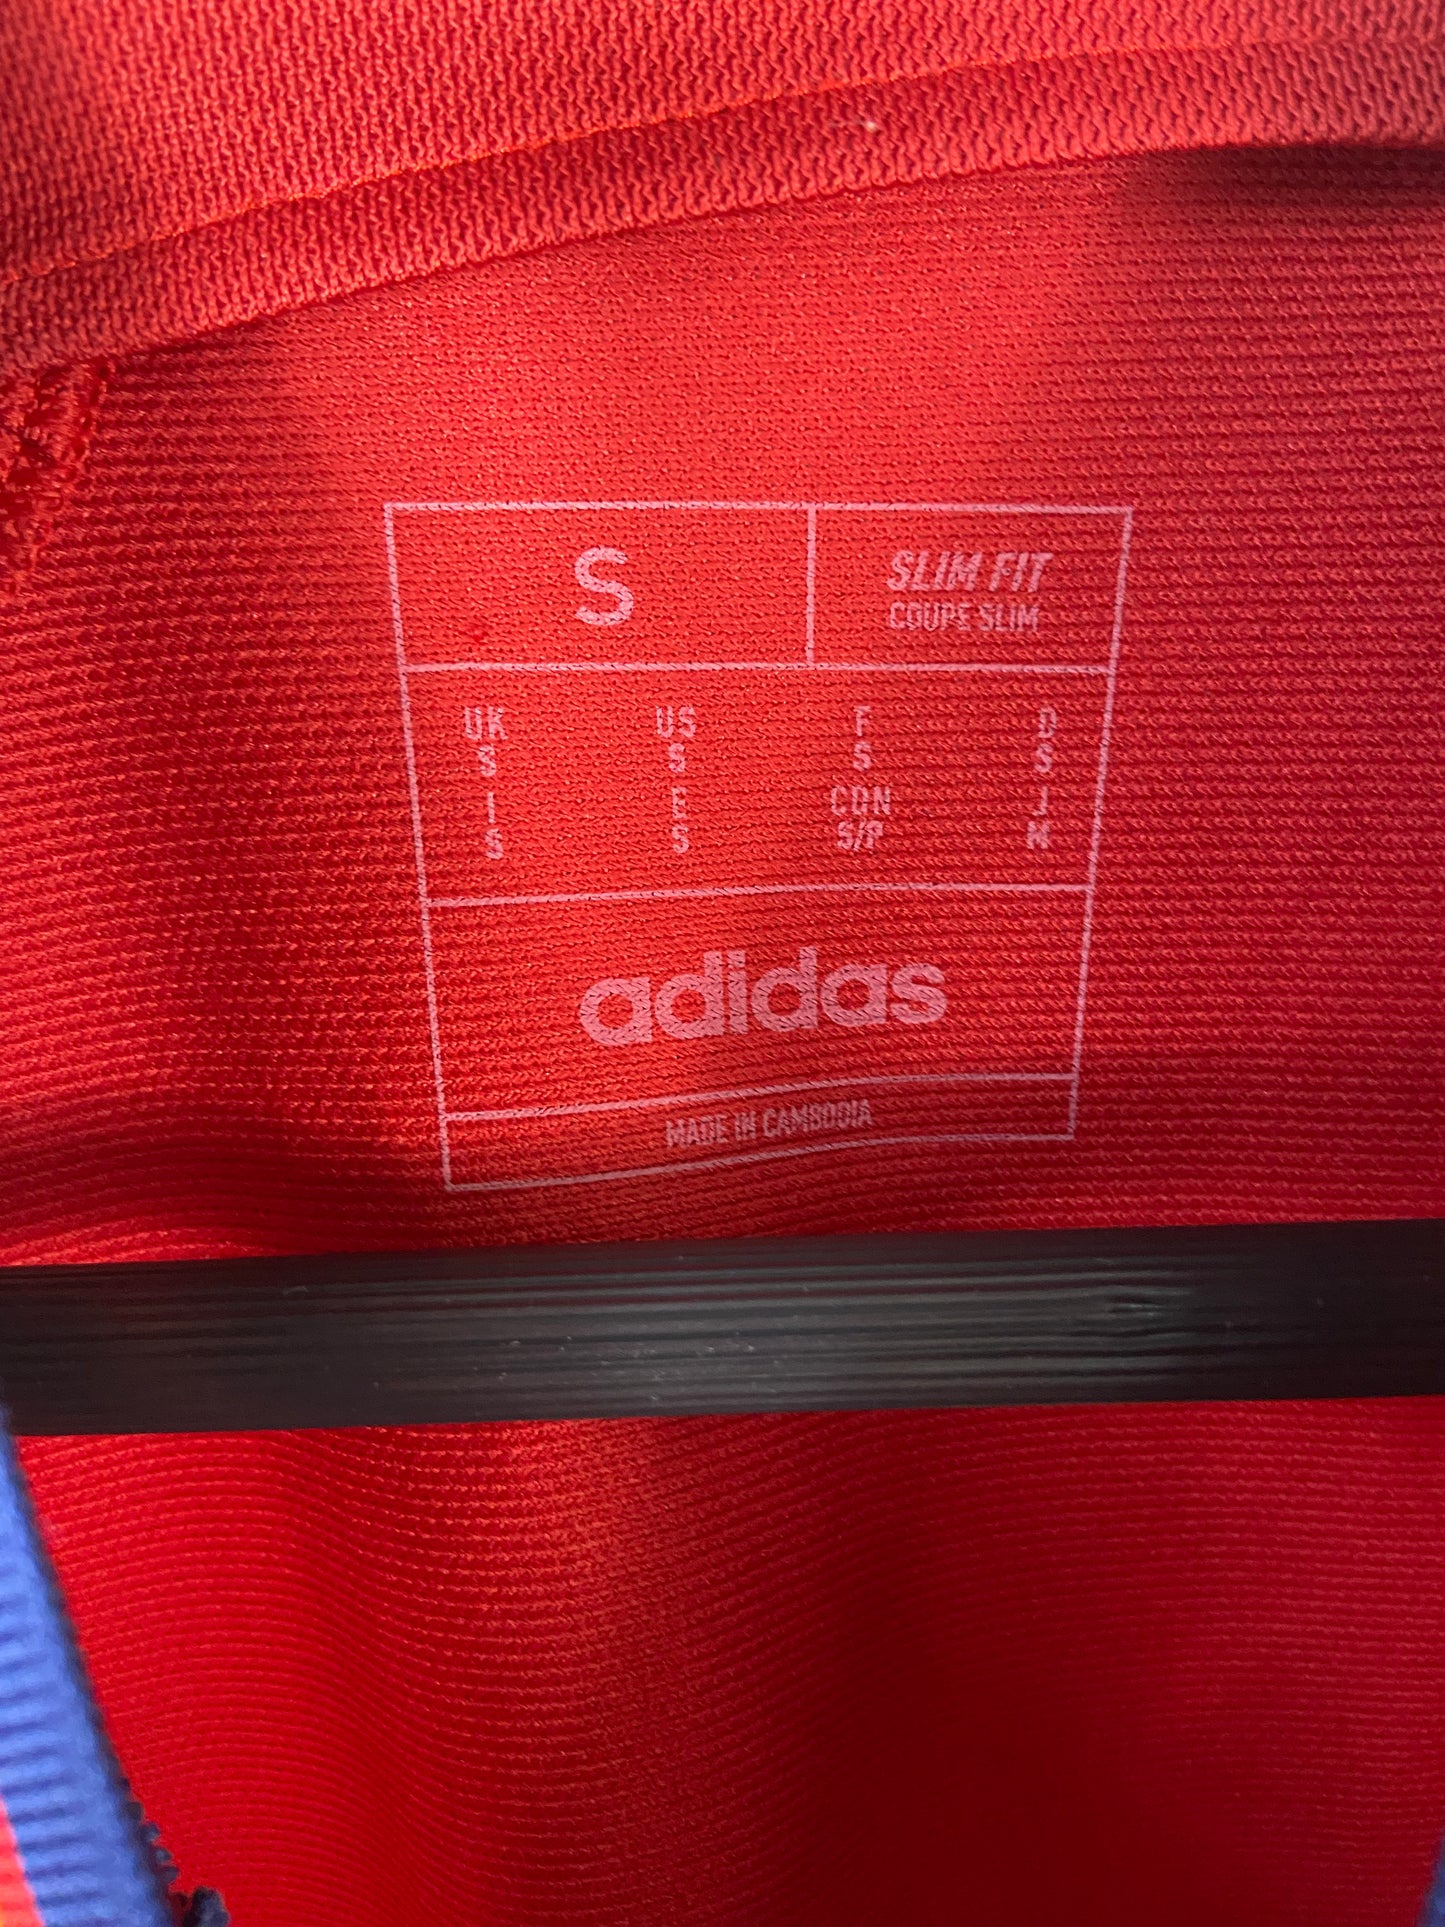 Adidas Spain '22 Home Soccer Jersey Sz S